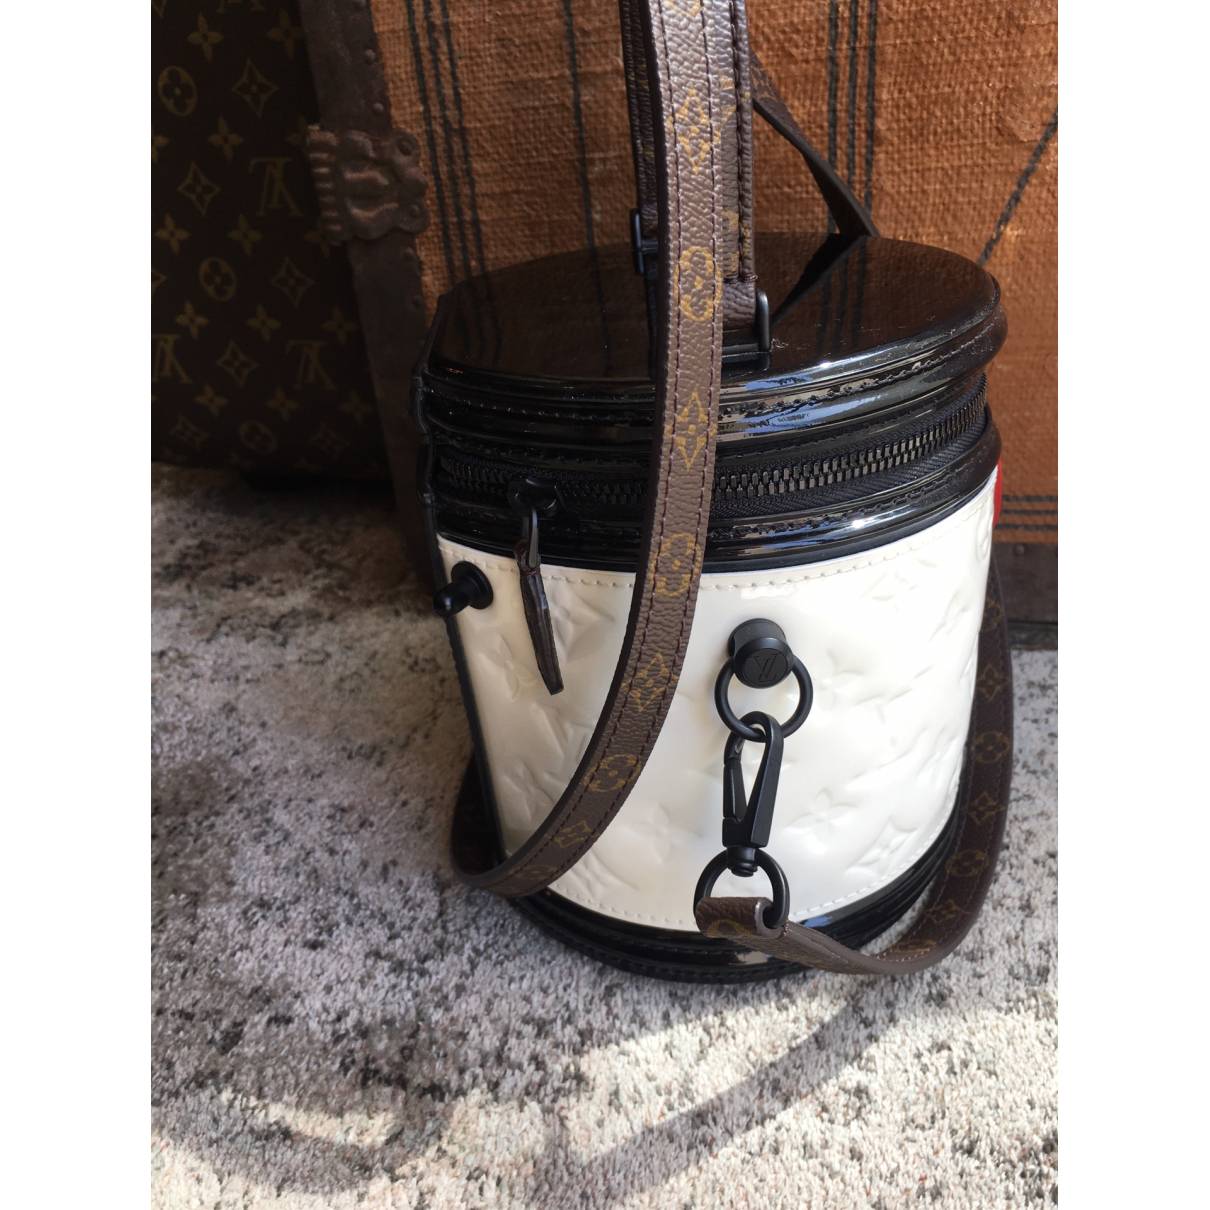 Louis Vuitton Monogram Vernis Cannes Bucket Bag